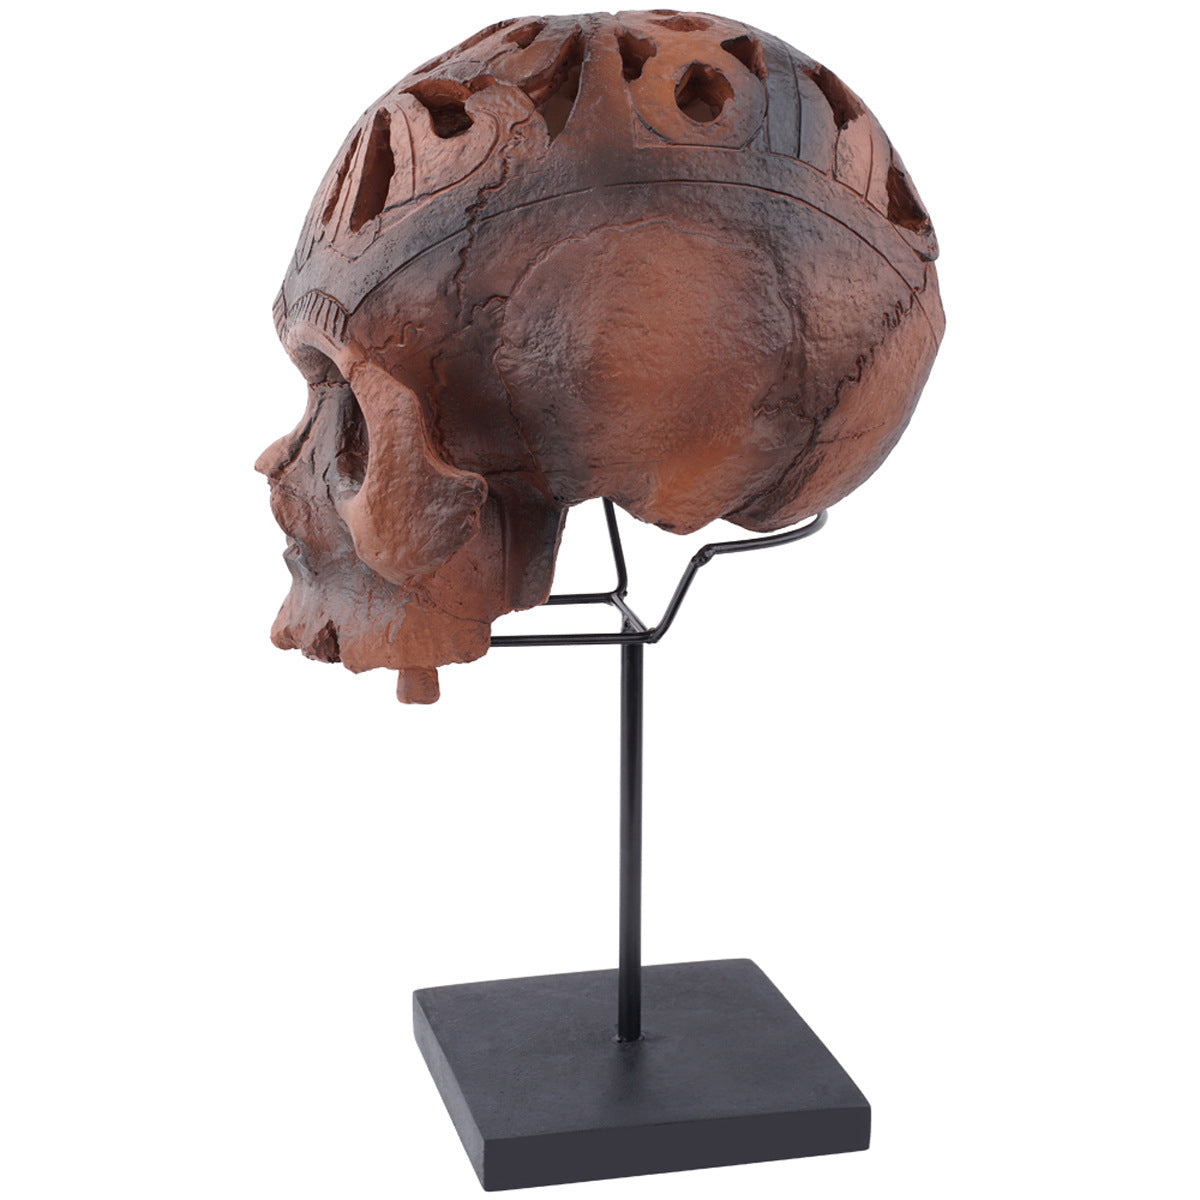 Hot Sell Resin Skull Human Model Ornament